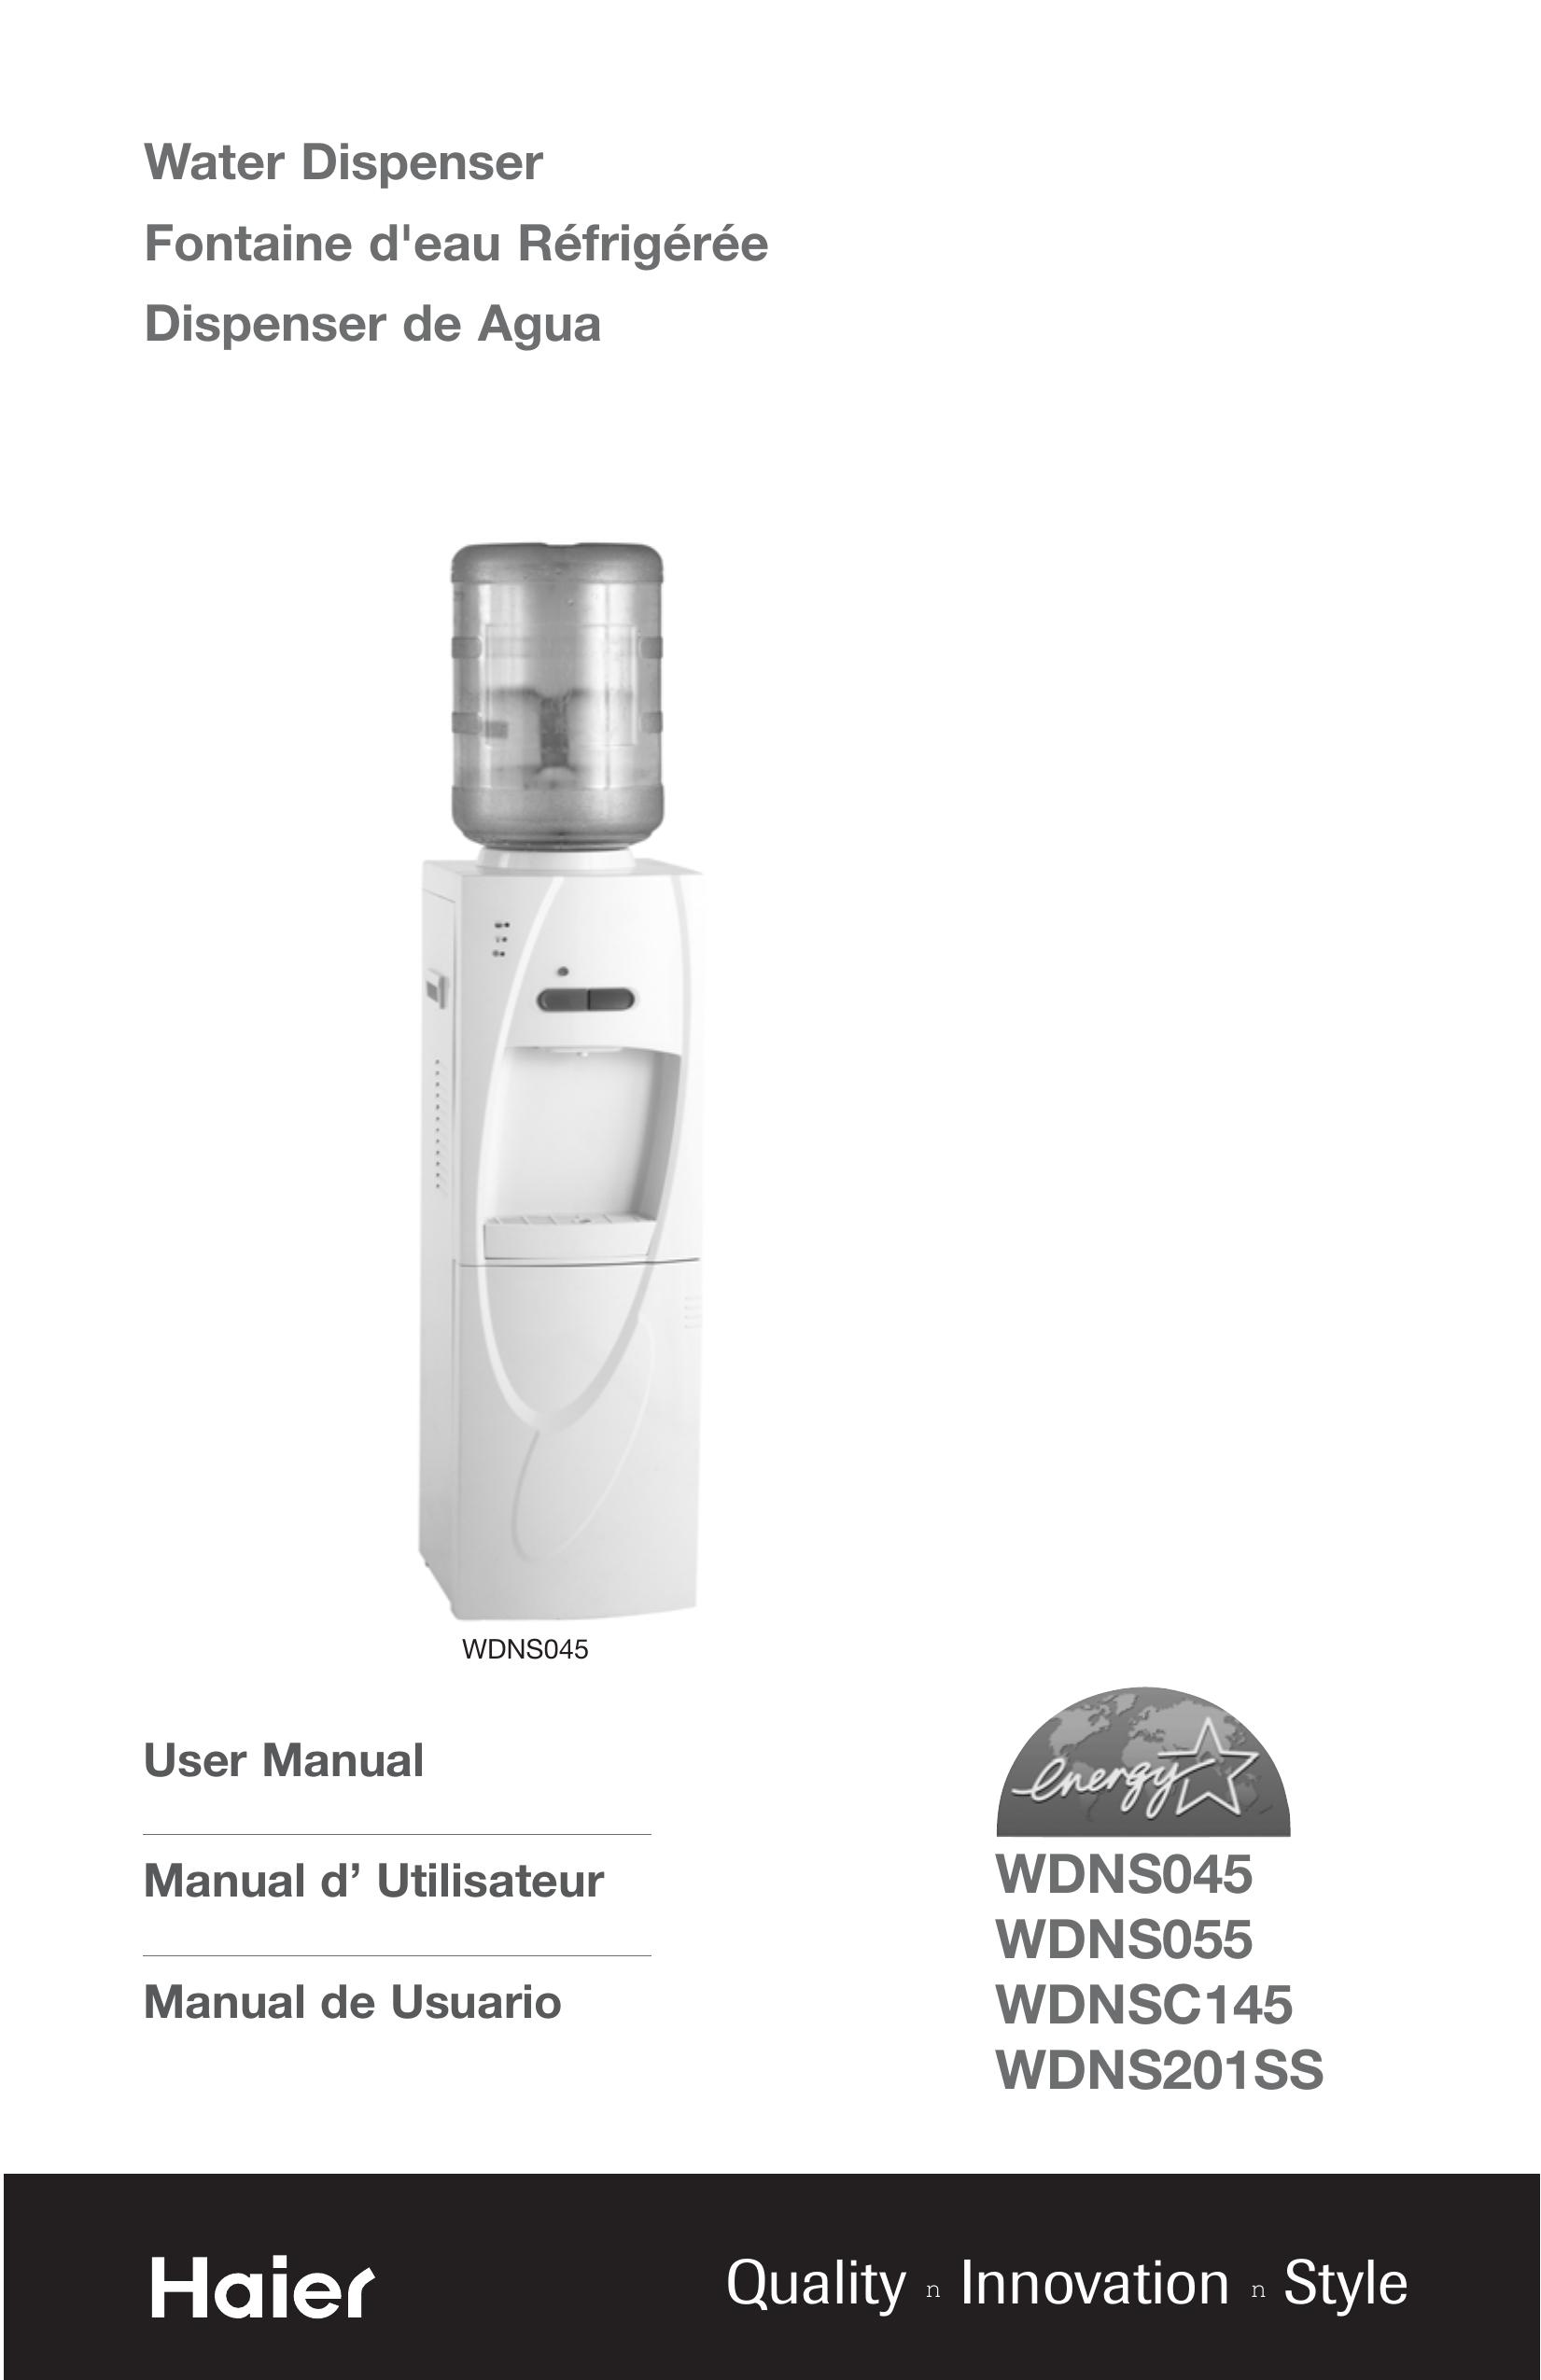 Haier WDNSC145 Water Dispenser User Manual